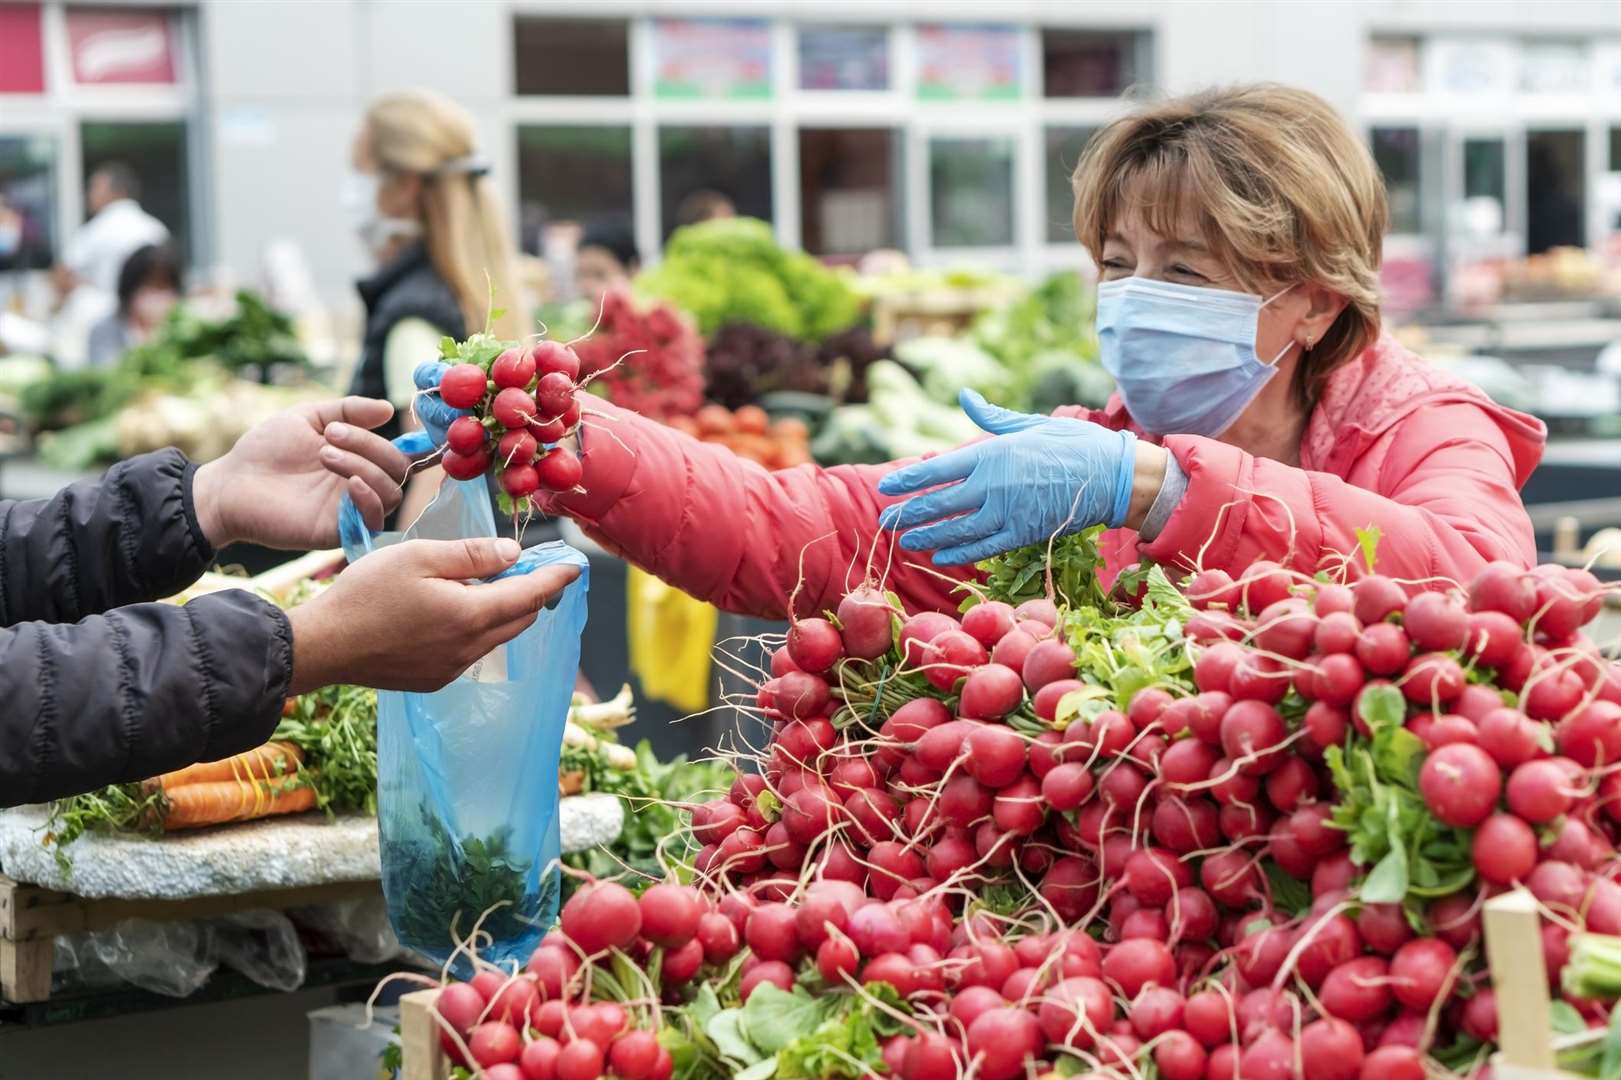 Farmers' markets are providing produce through lockdown